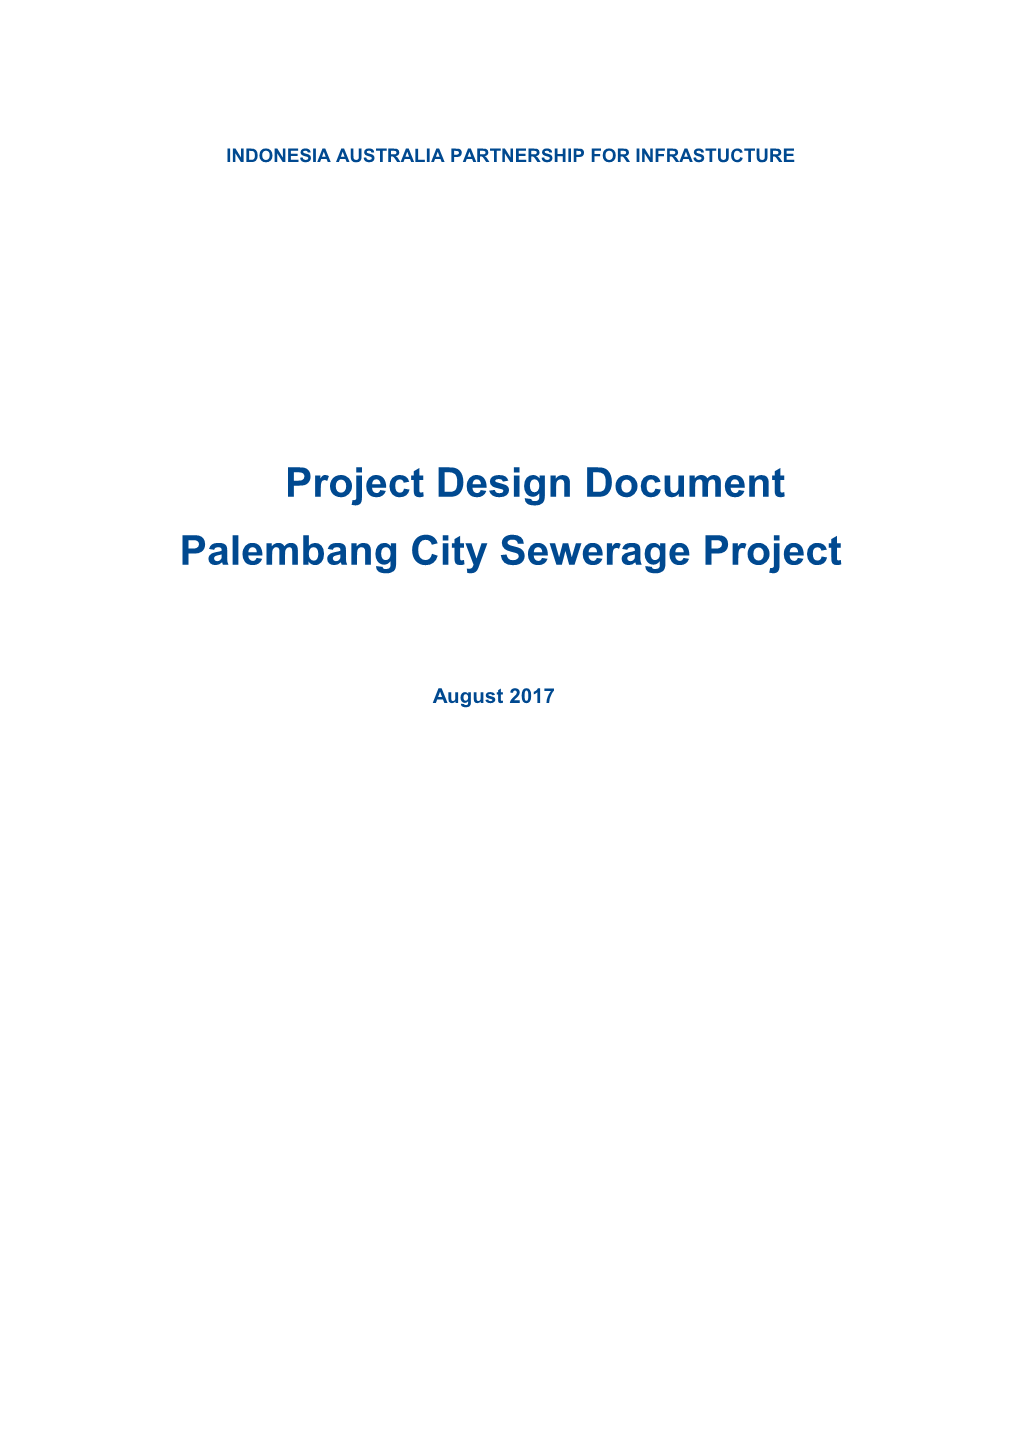 Palembang City Sewerage Project (PCSP) Project Design Document